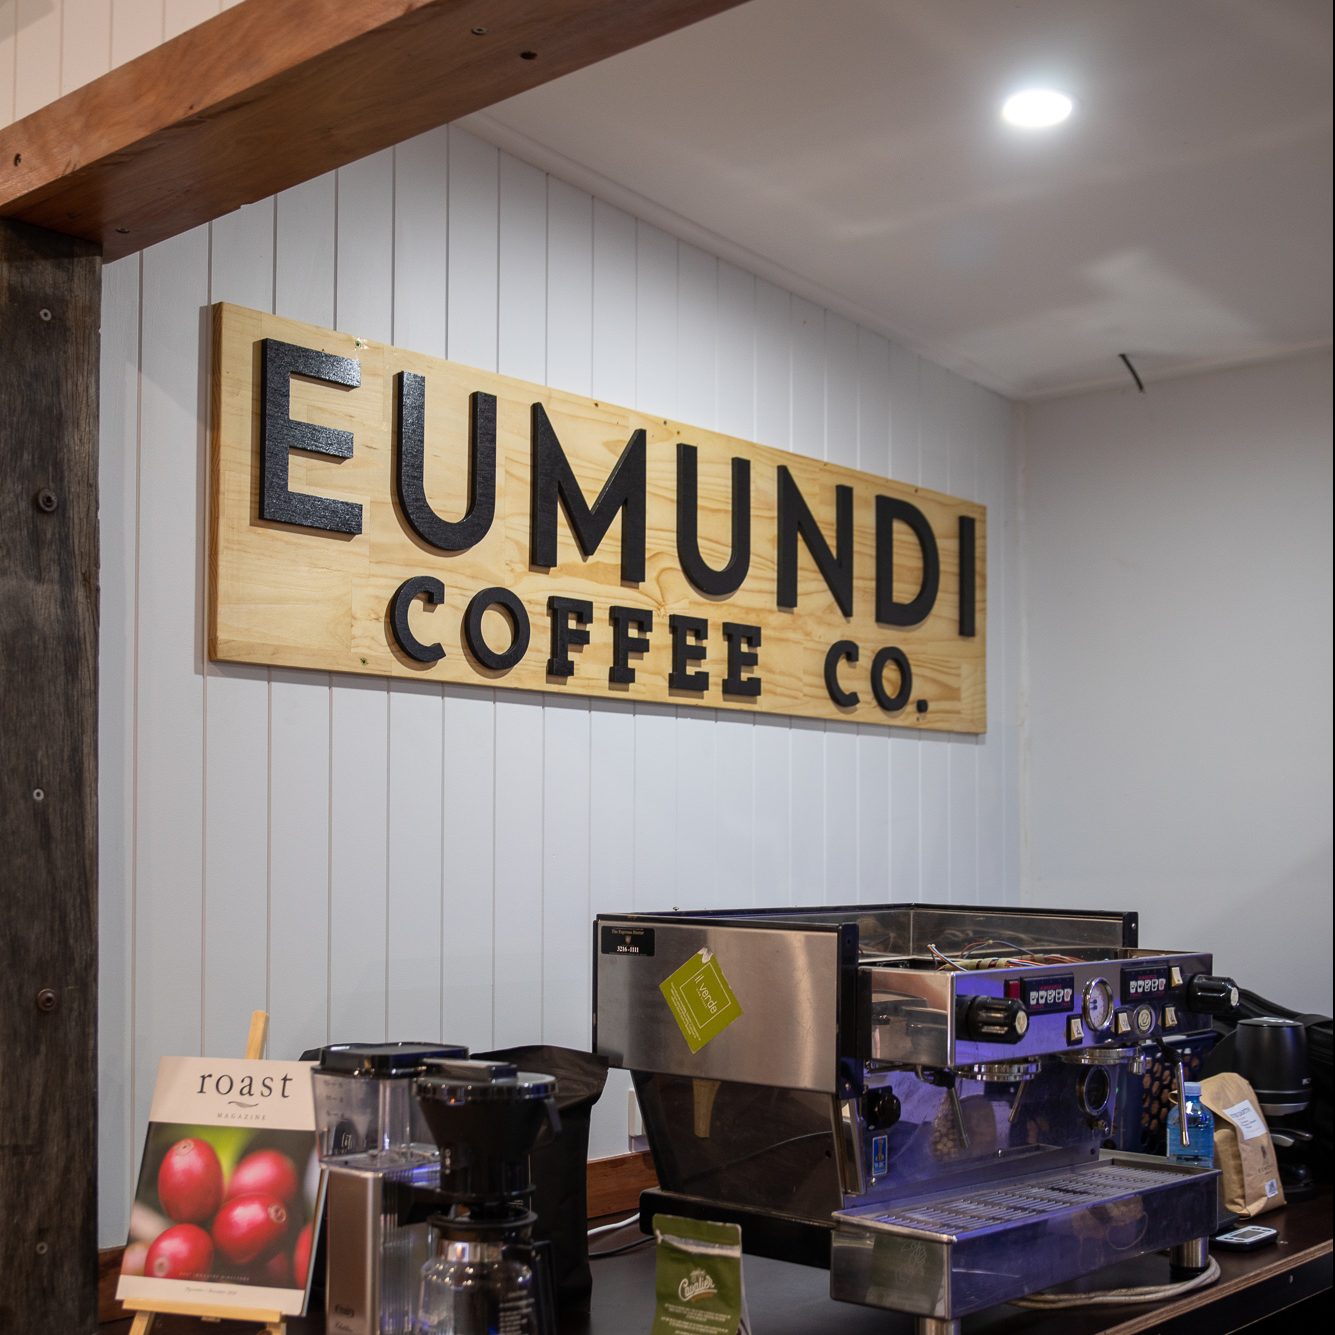 Eumundi Coffee